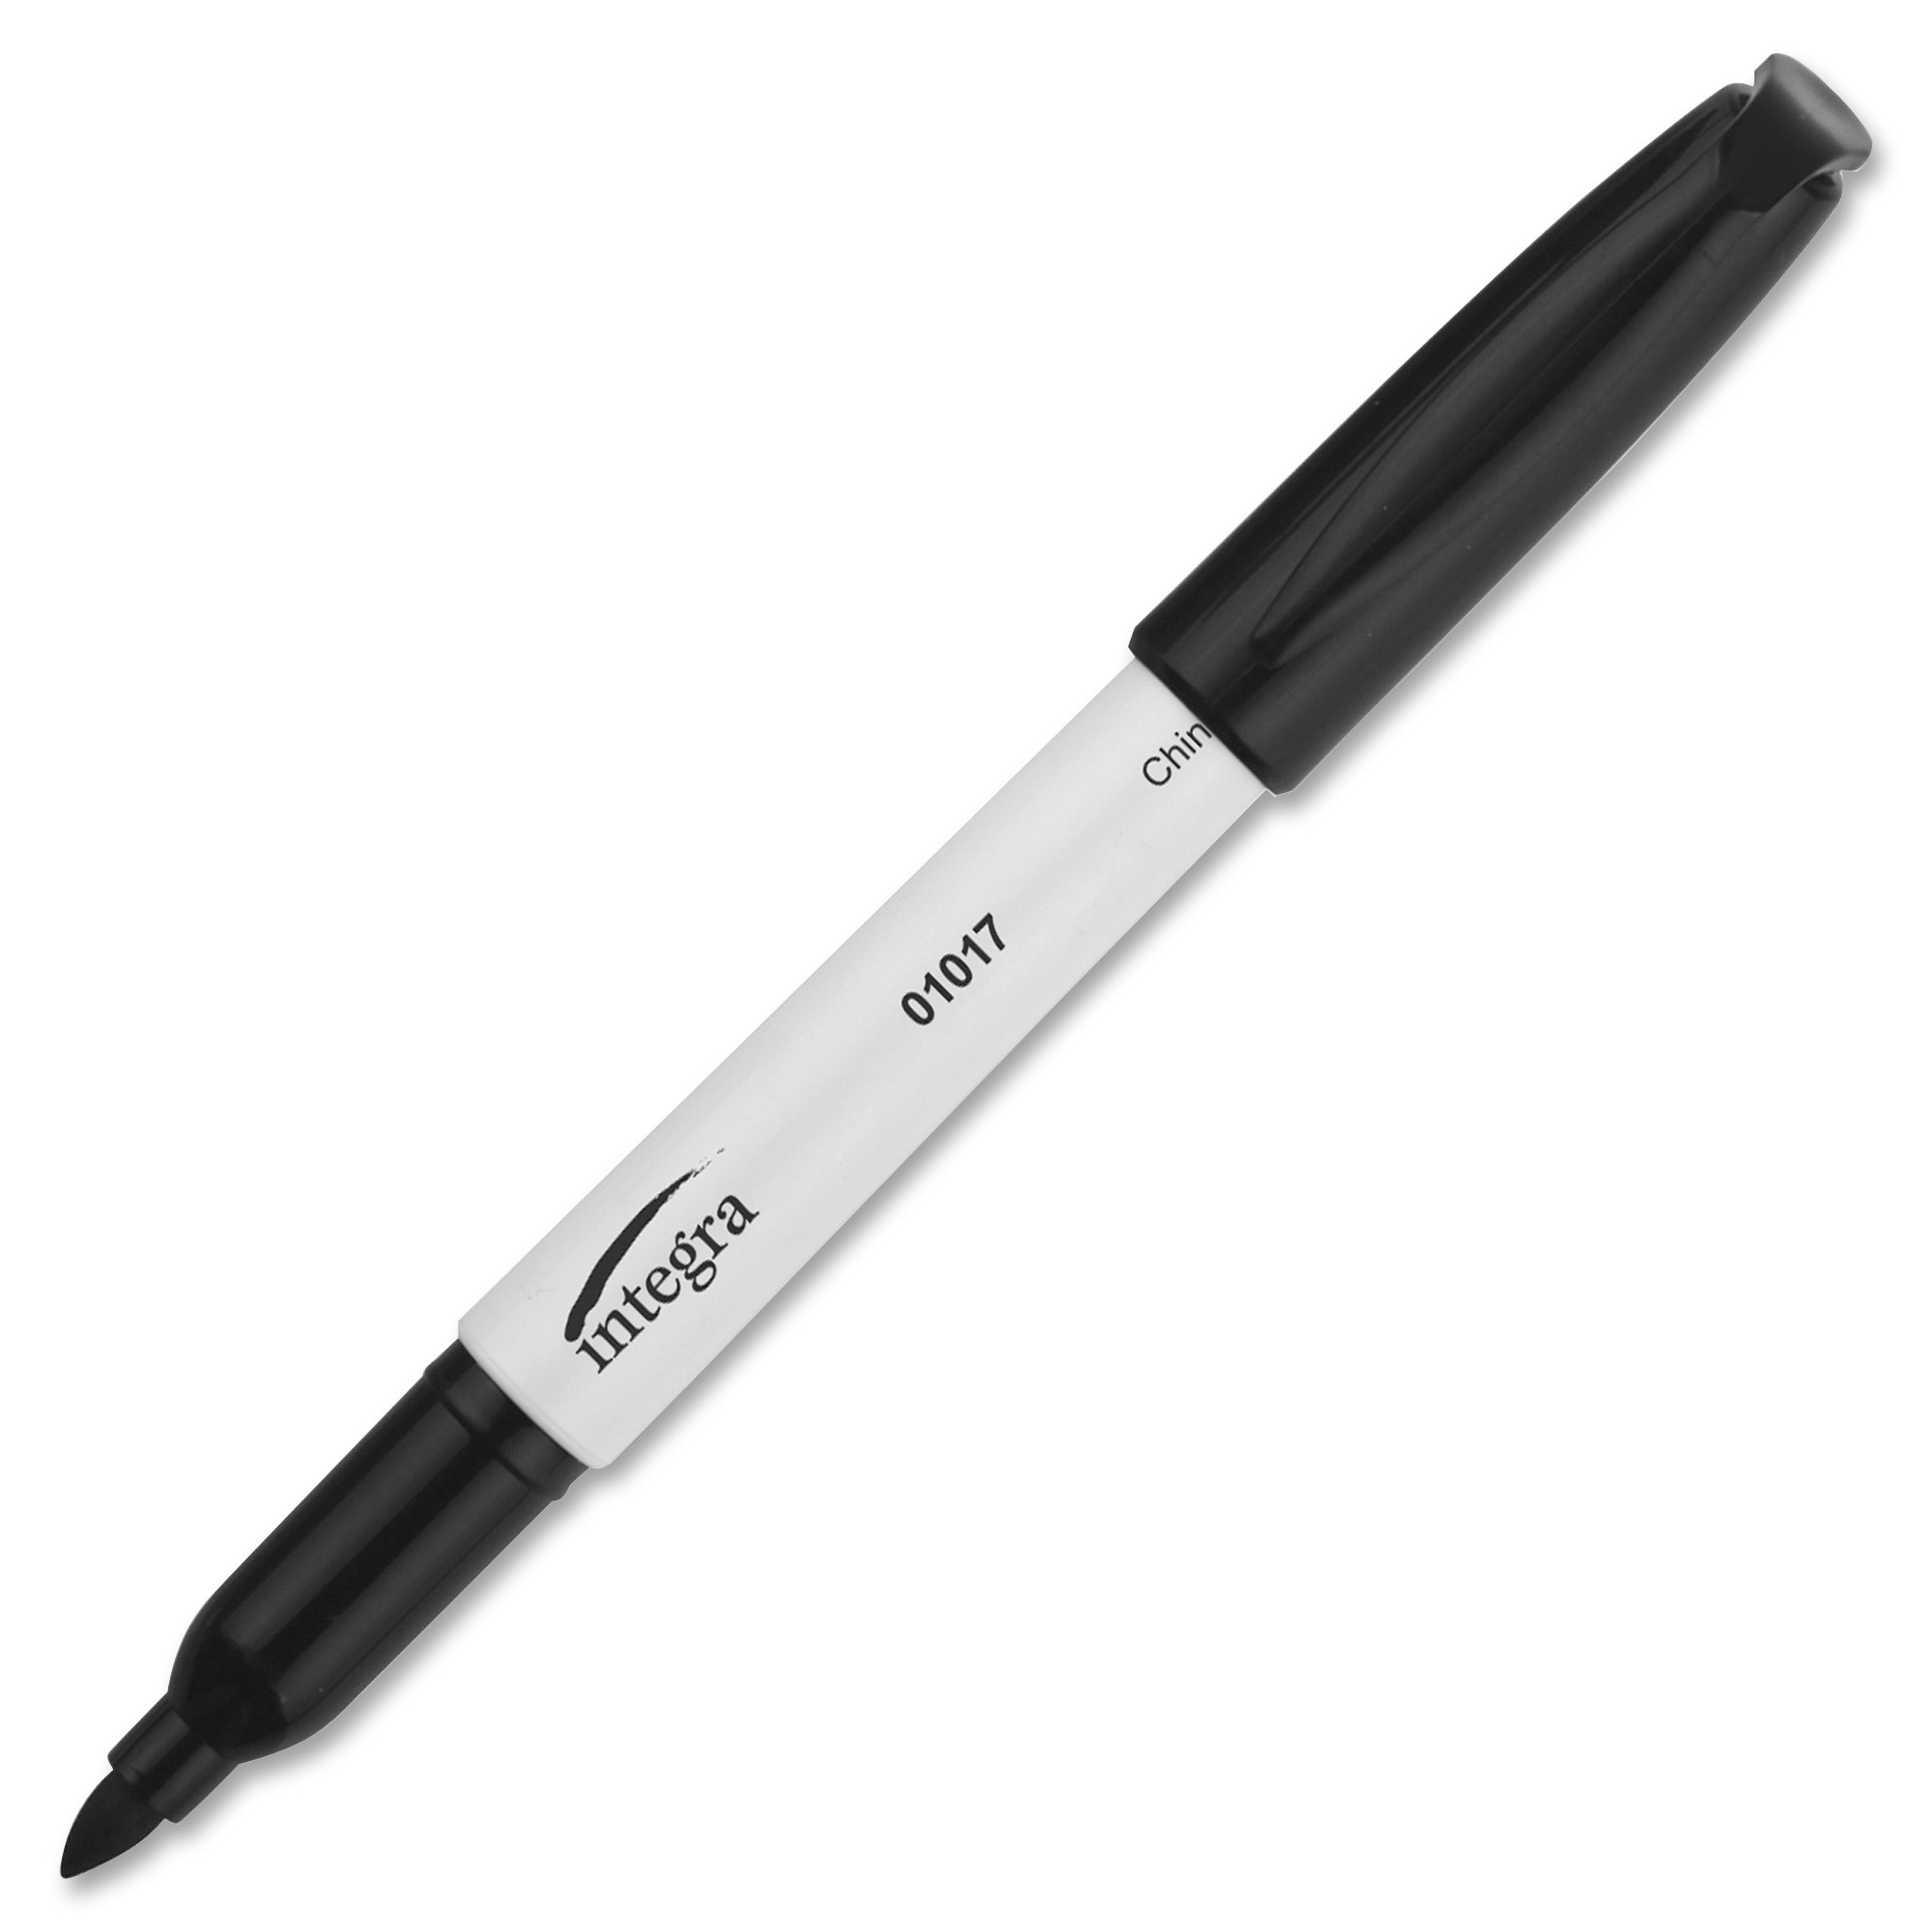 Ticonderoga Beginner Pencil with Eraser - #2 Lead - Yellow Barrel - 1 Dozen